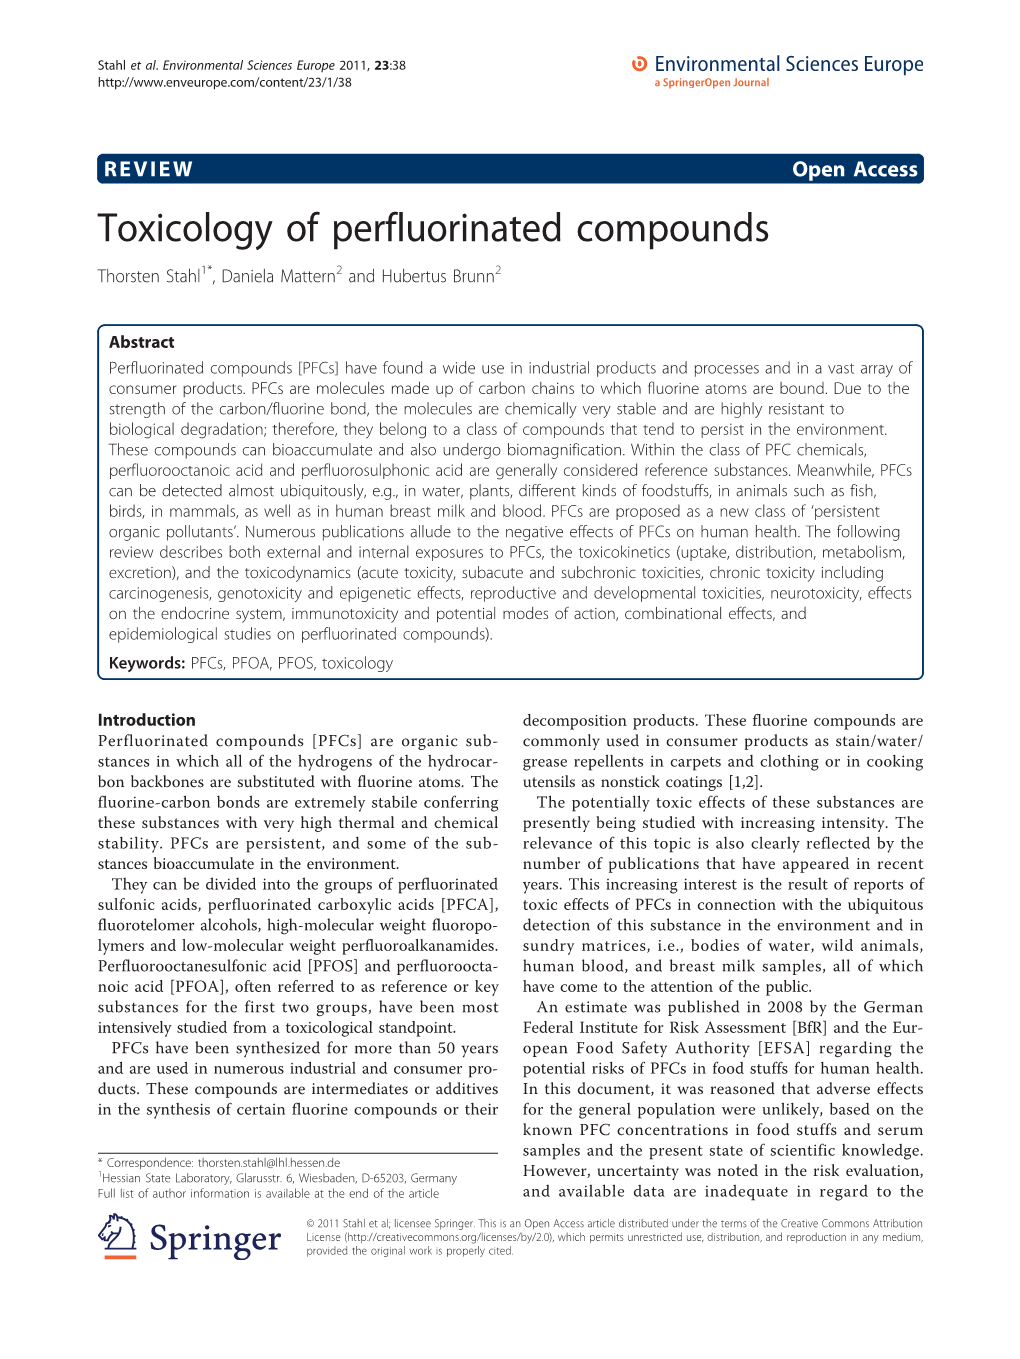 Toxicology of Perfluorinated Compounds Thorsten Stahl1*, Daniela Mattern2 and Hubertus Brunn2